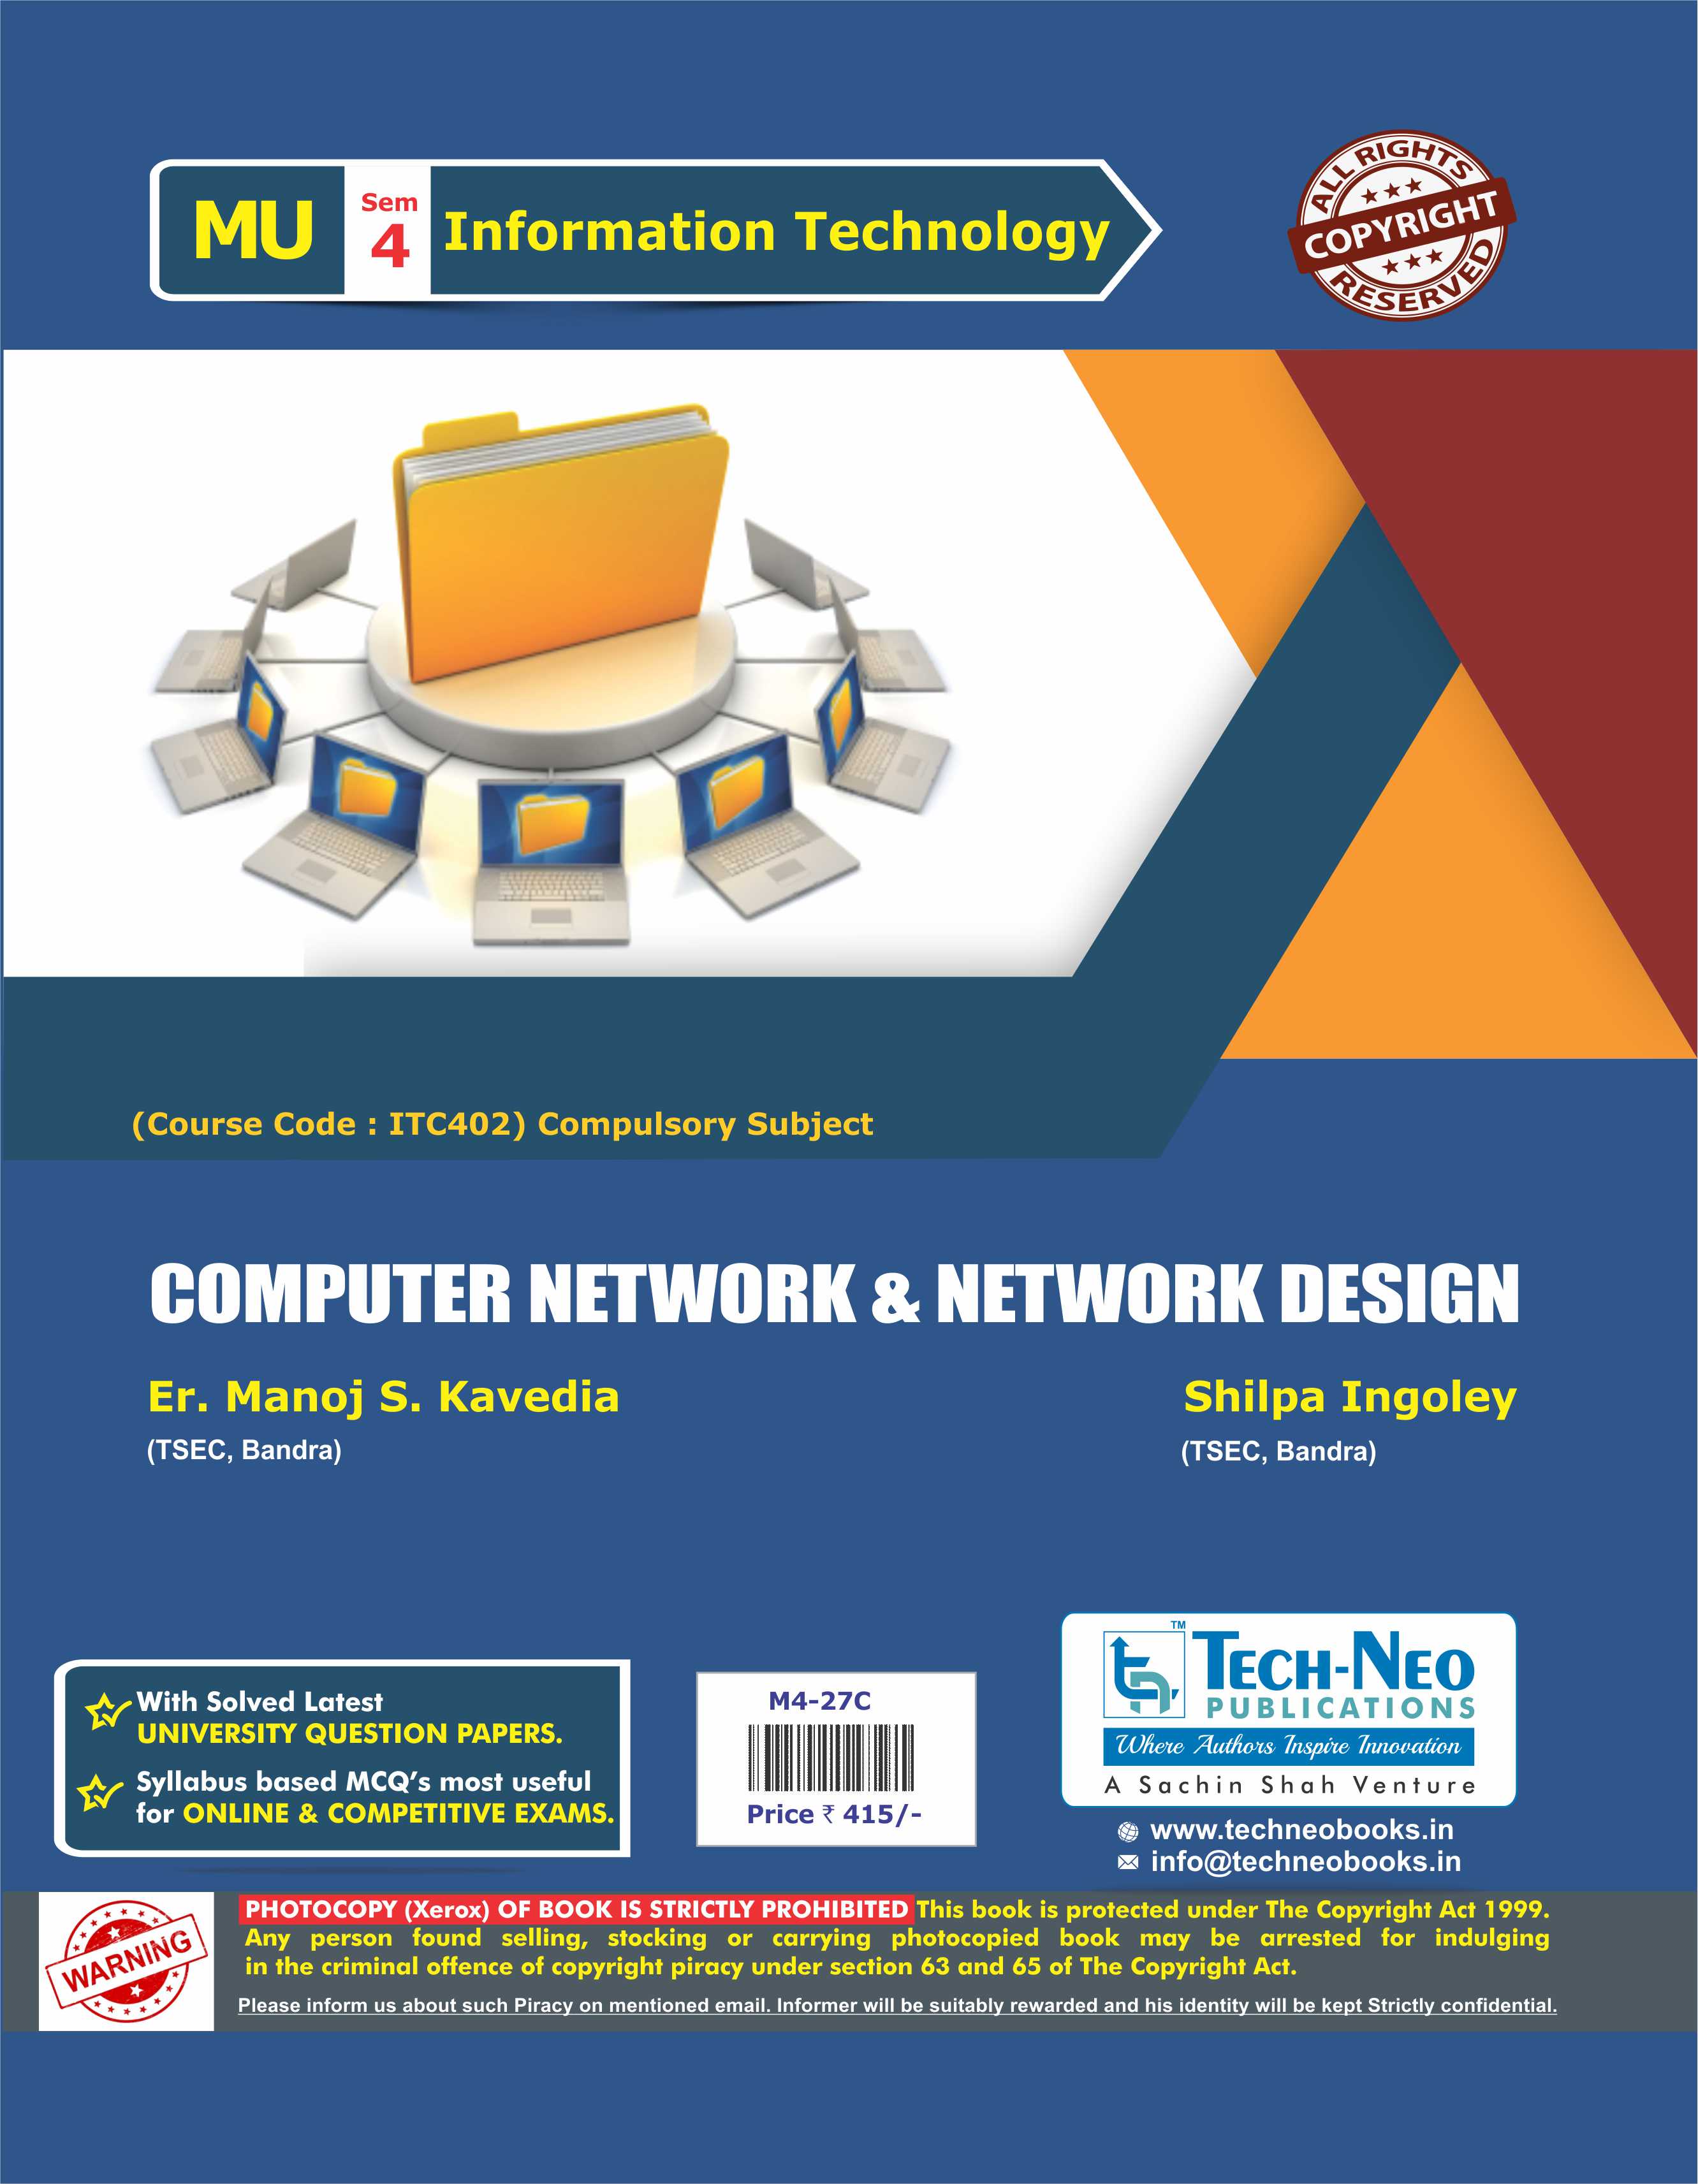 Computer Network & Network Design (ITC402)